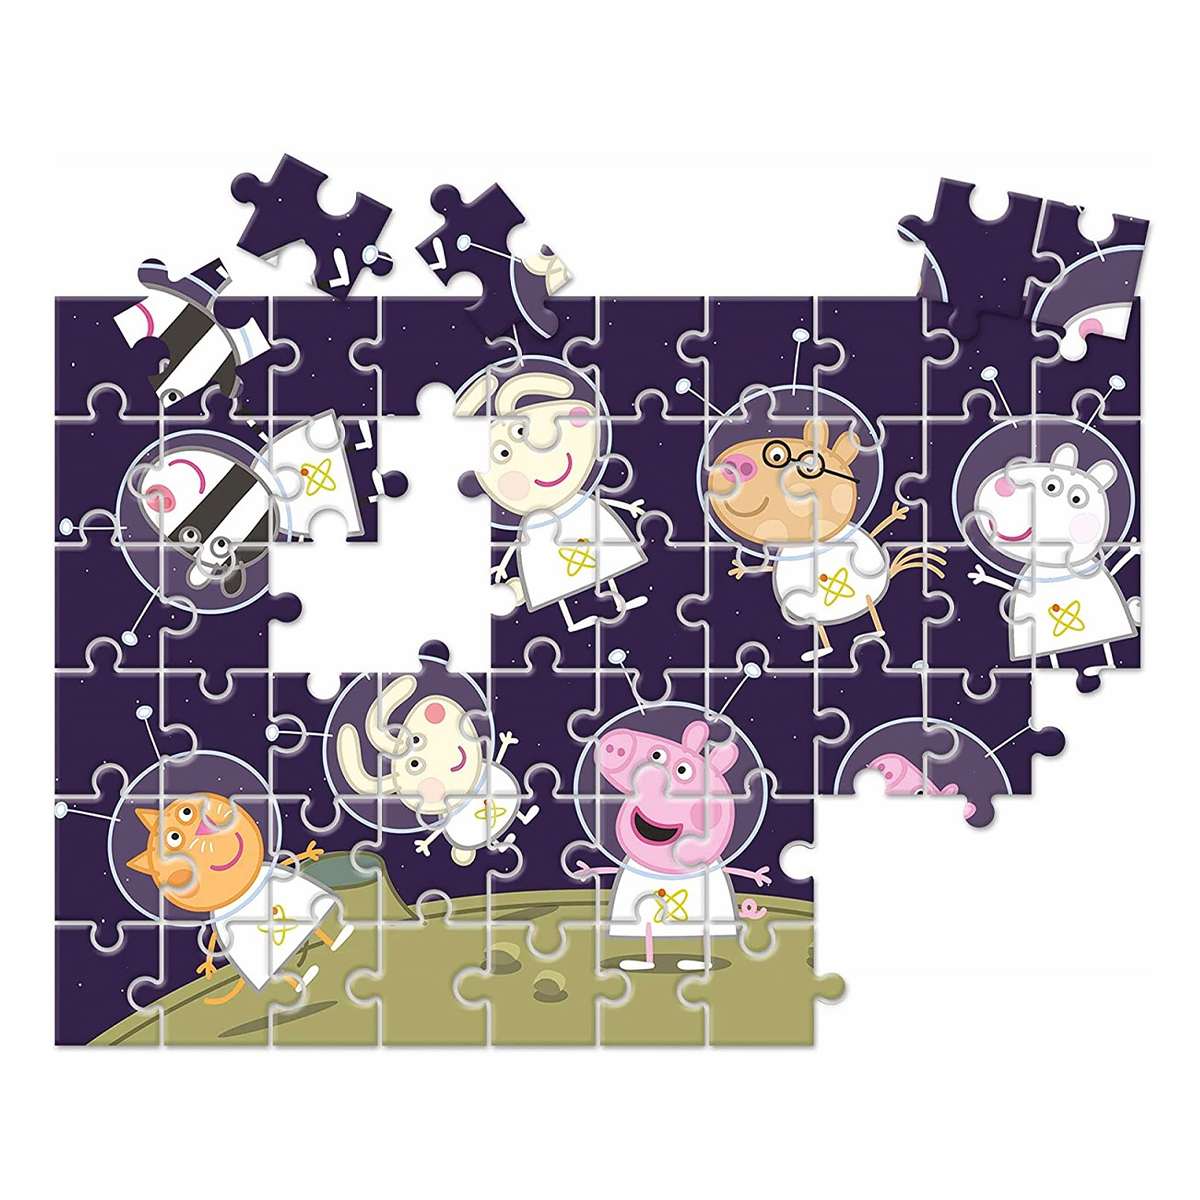 Puzzle Infantil Peppa Pig de Clementoni con doble cara para Colorear de 60 piezas